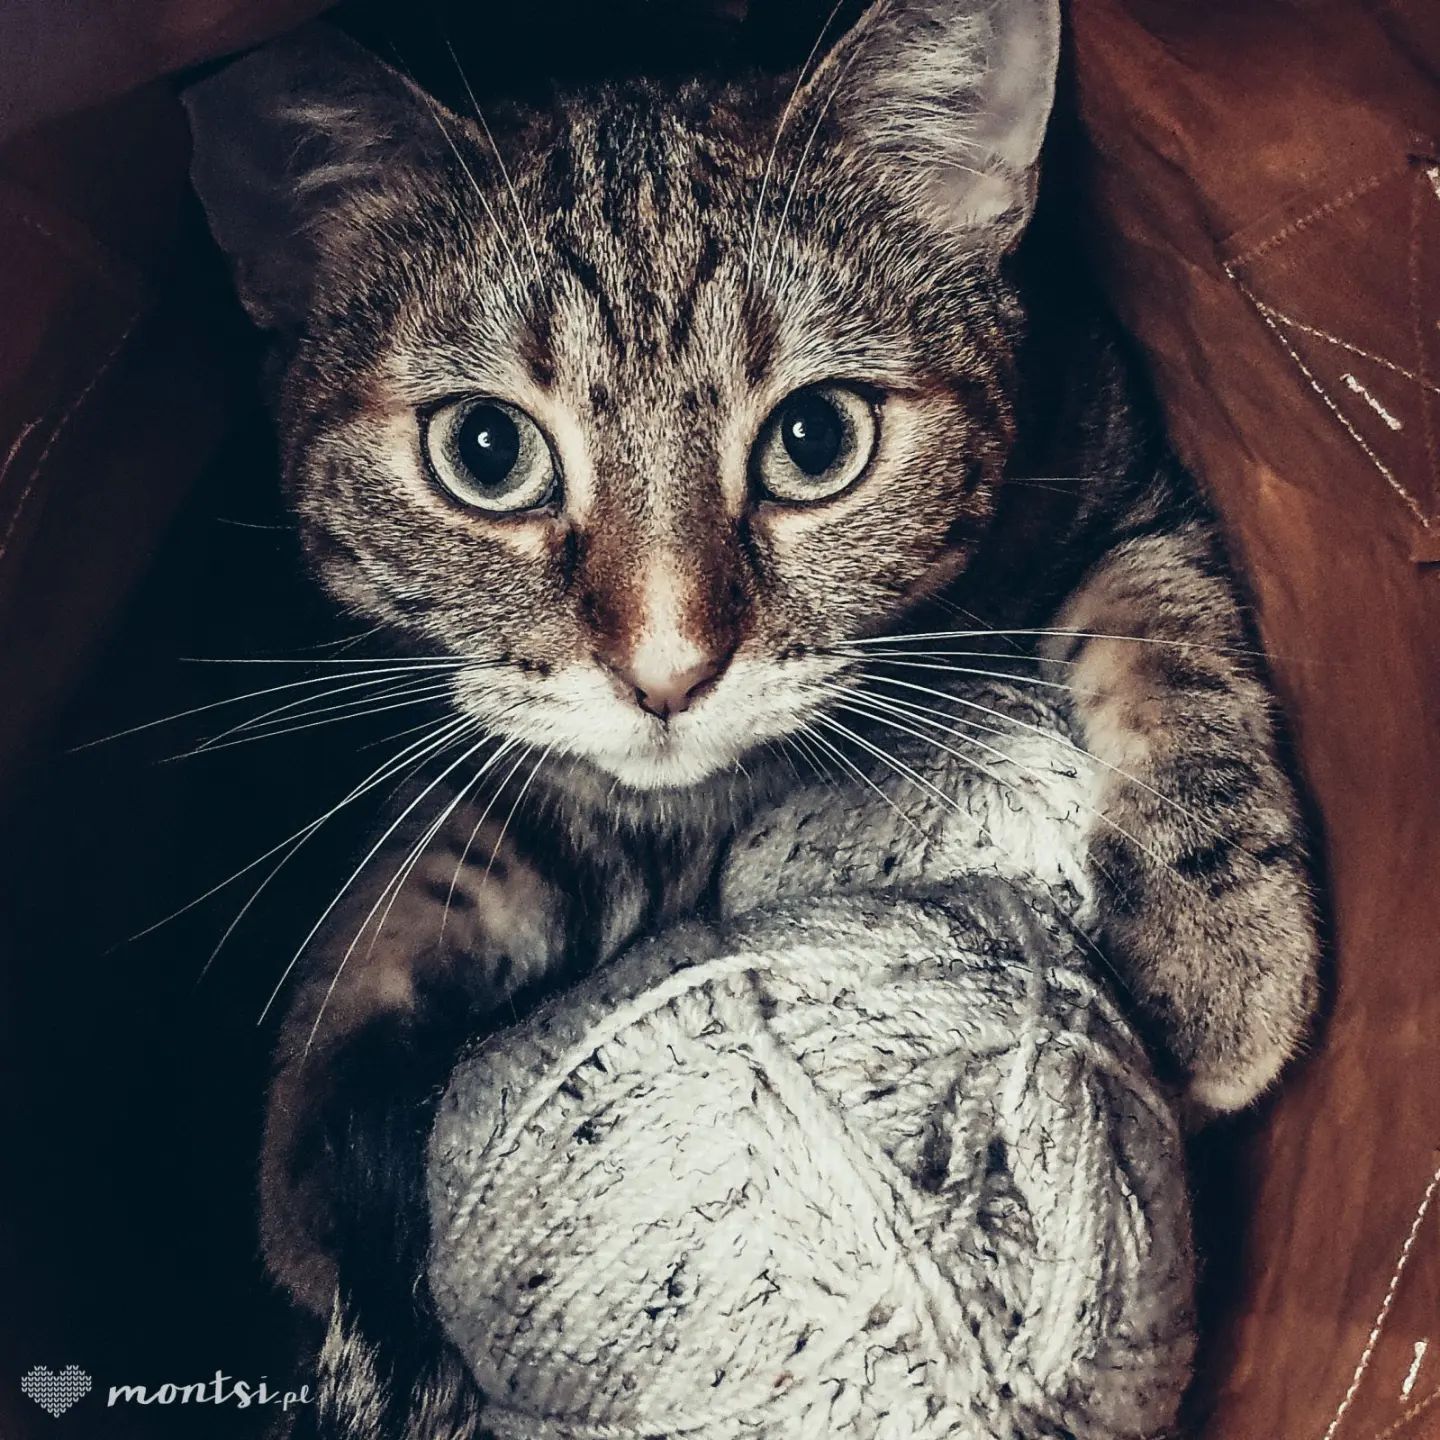 Po nitce do kotka 😼

#ramithecat #catsofinstagram #catlife #cats_of_world #instacat #catsgram #catslover #lifewithcats #knitting #crocheting #handmade #catsandcrafts #homedecor #diy